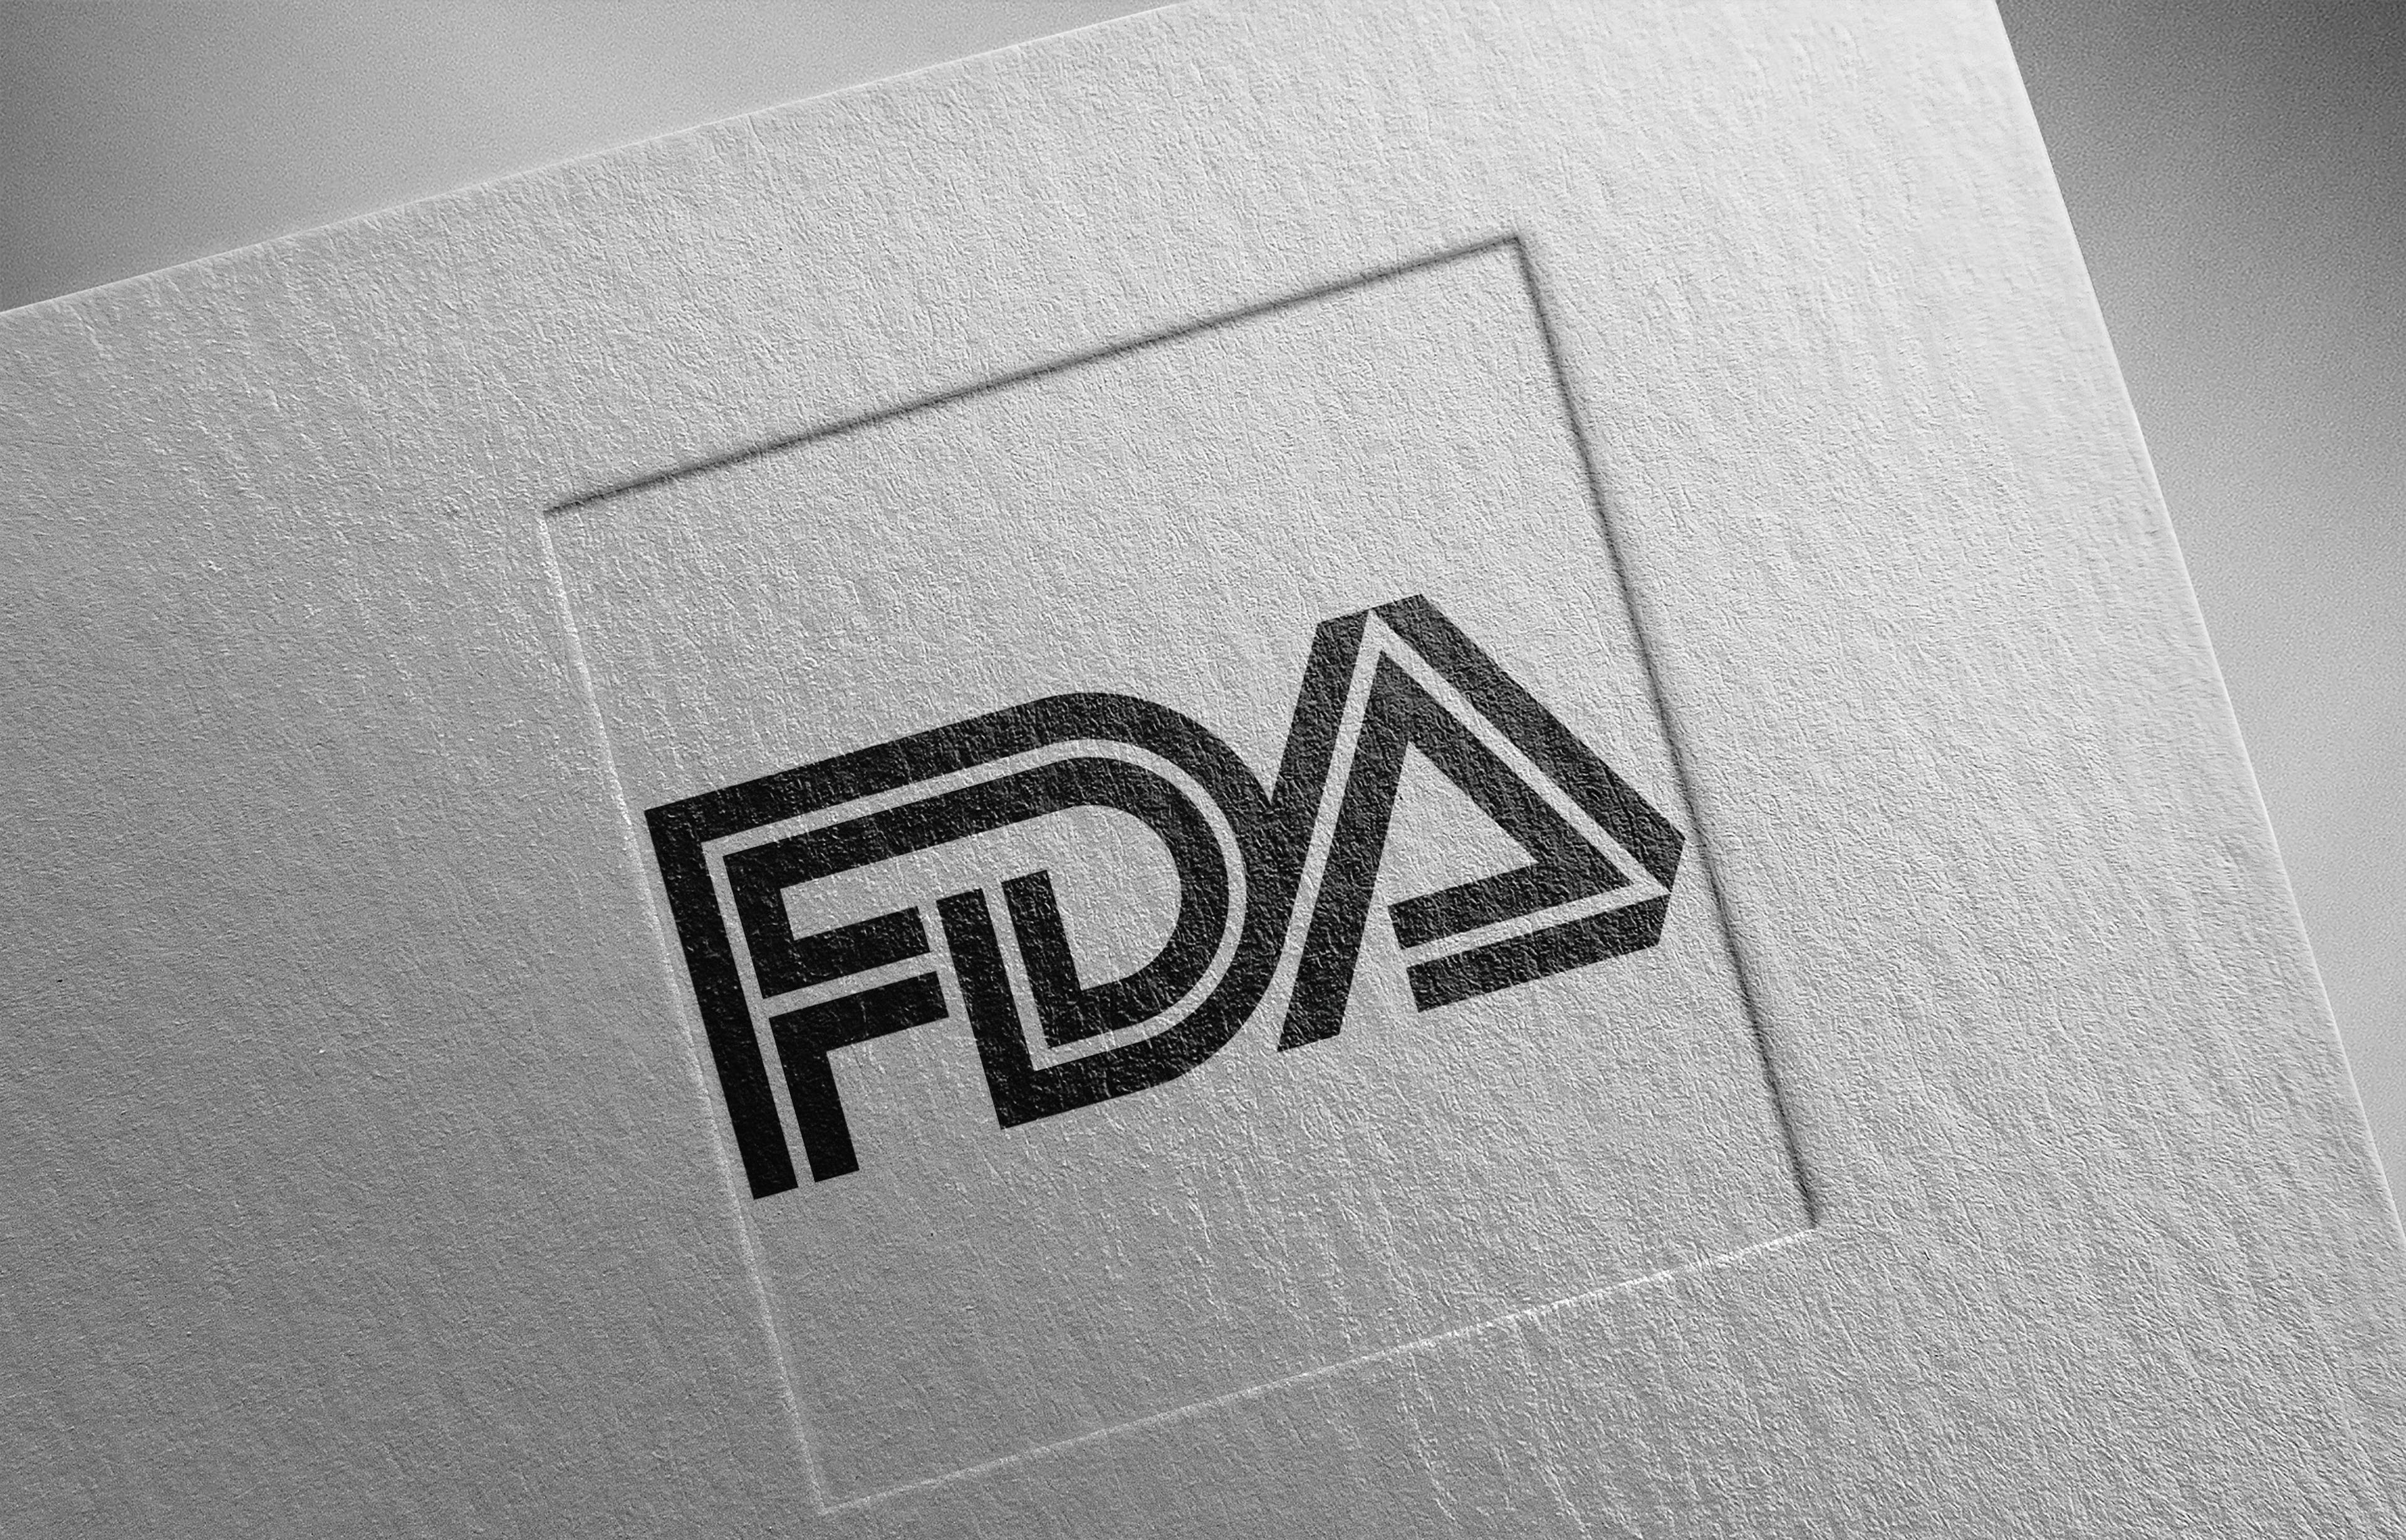 The FDA has accepted an sNDA for tapinarof cream 1% for treatment of atopic dermatitis / Araki Illustrations - stock.adobe.com